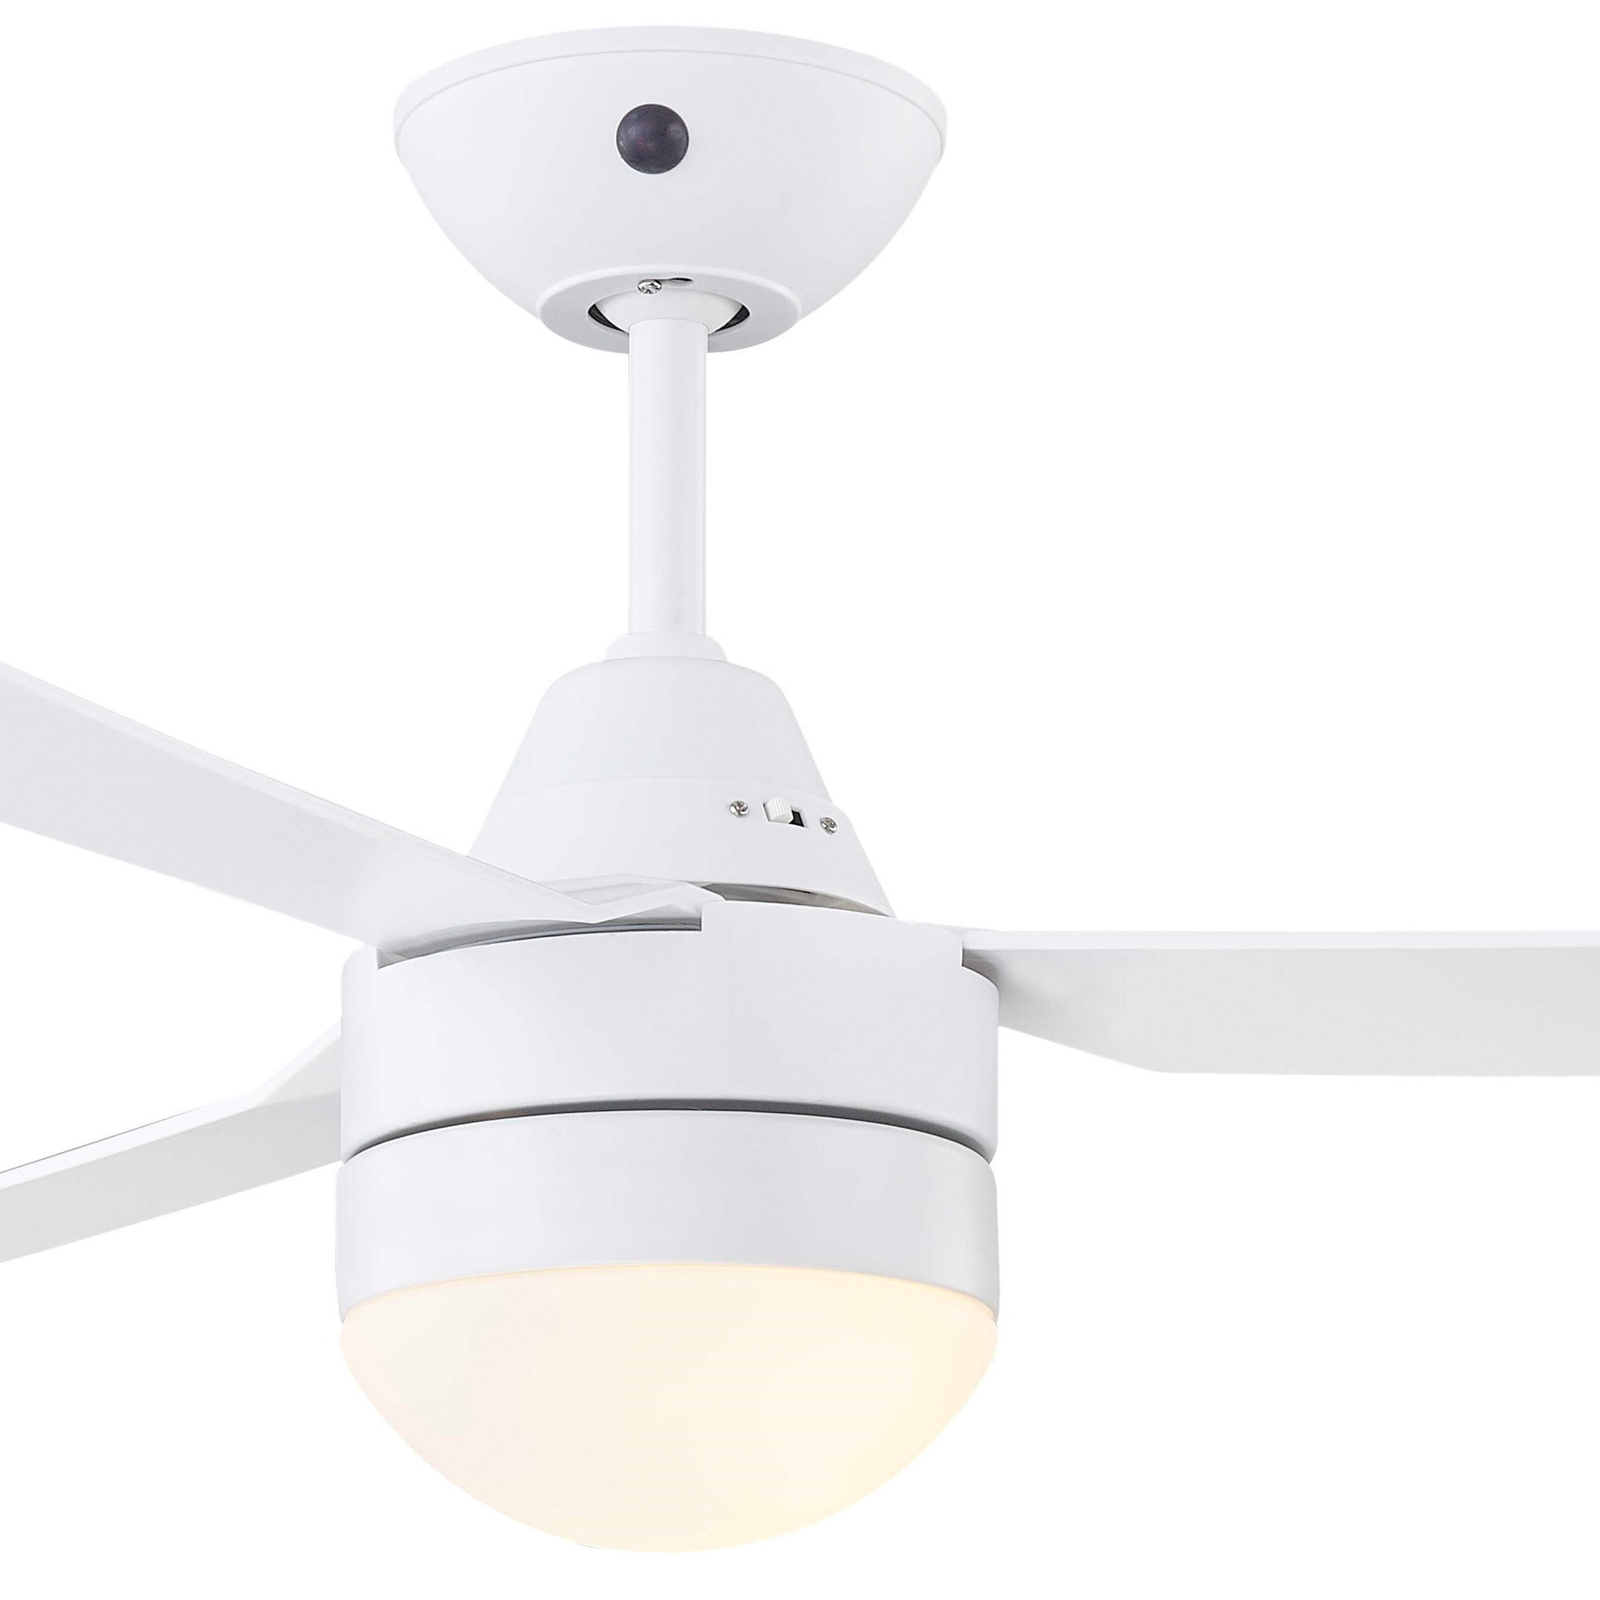 Beacon ceiling fan with light Megara white Ø 122 cm quiet